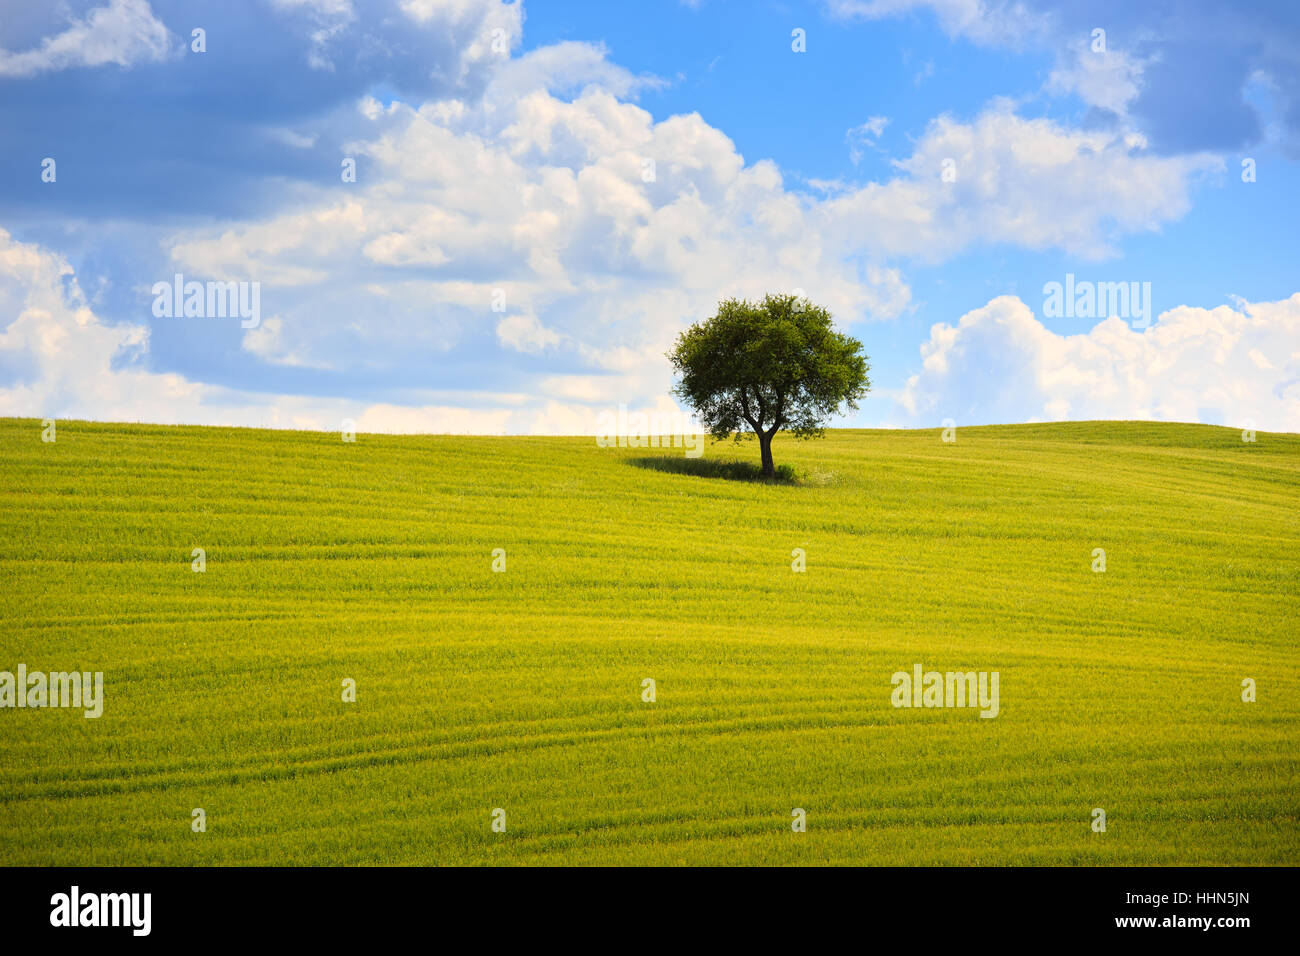 Tuscany Land Landschaft, Oliven Baum und grüne Felder. Montalcino, Italien, Europa. Stockfoto